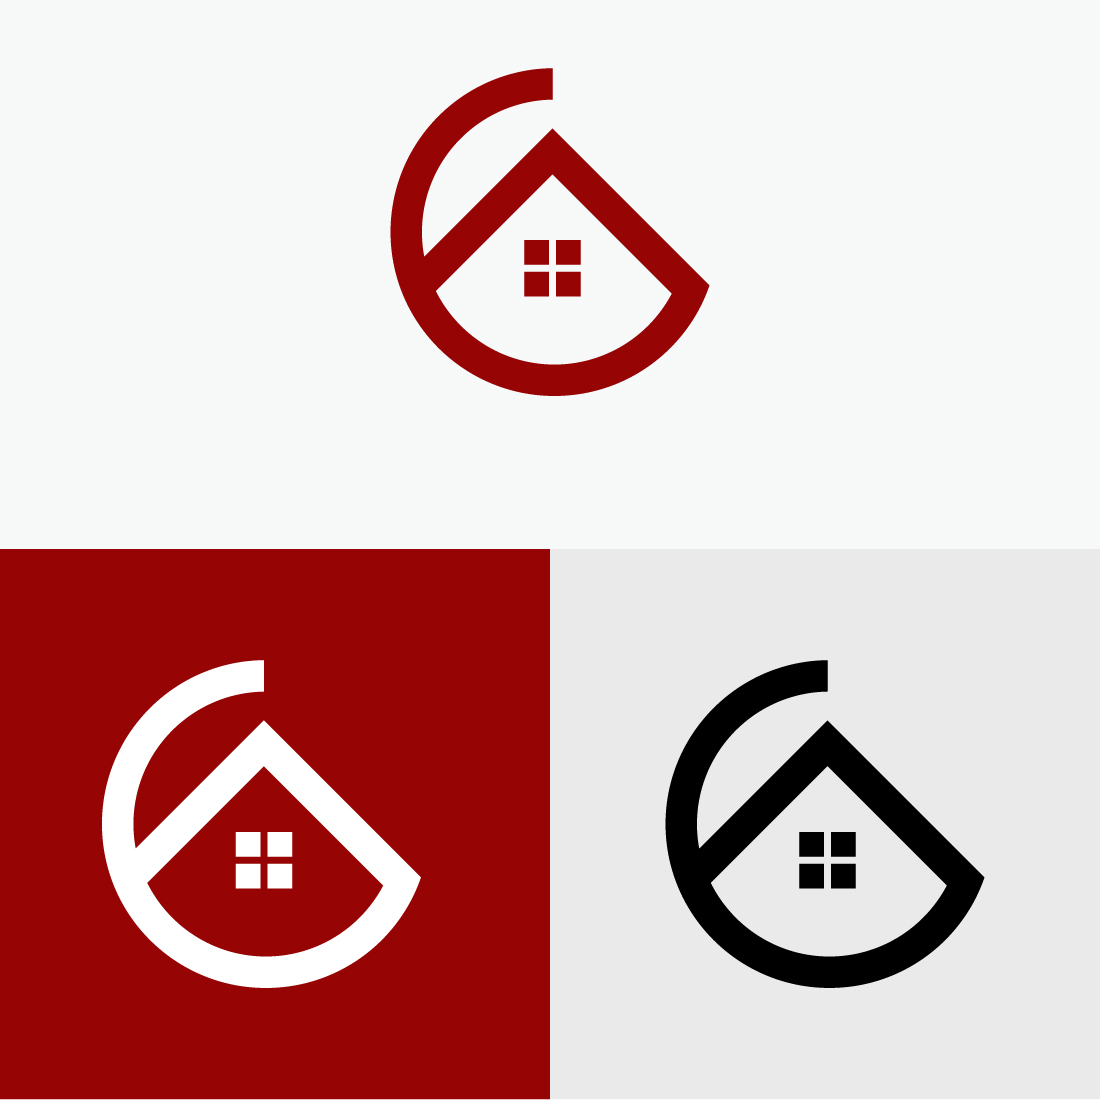 File:House House logo.svg - Wikipedia